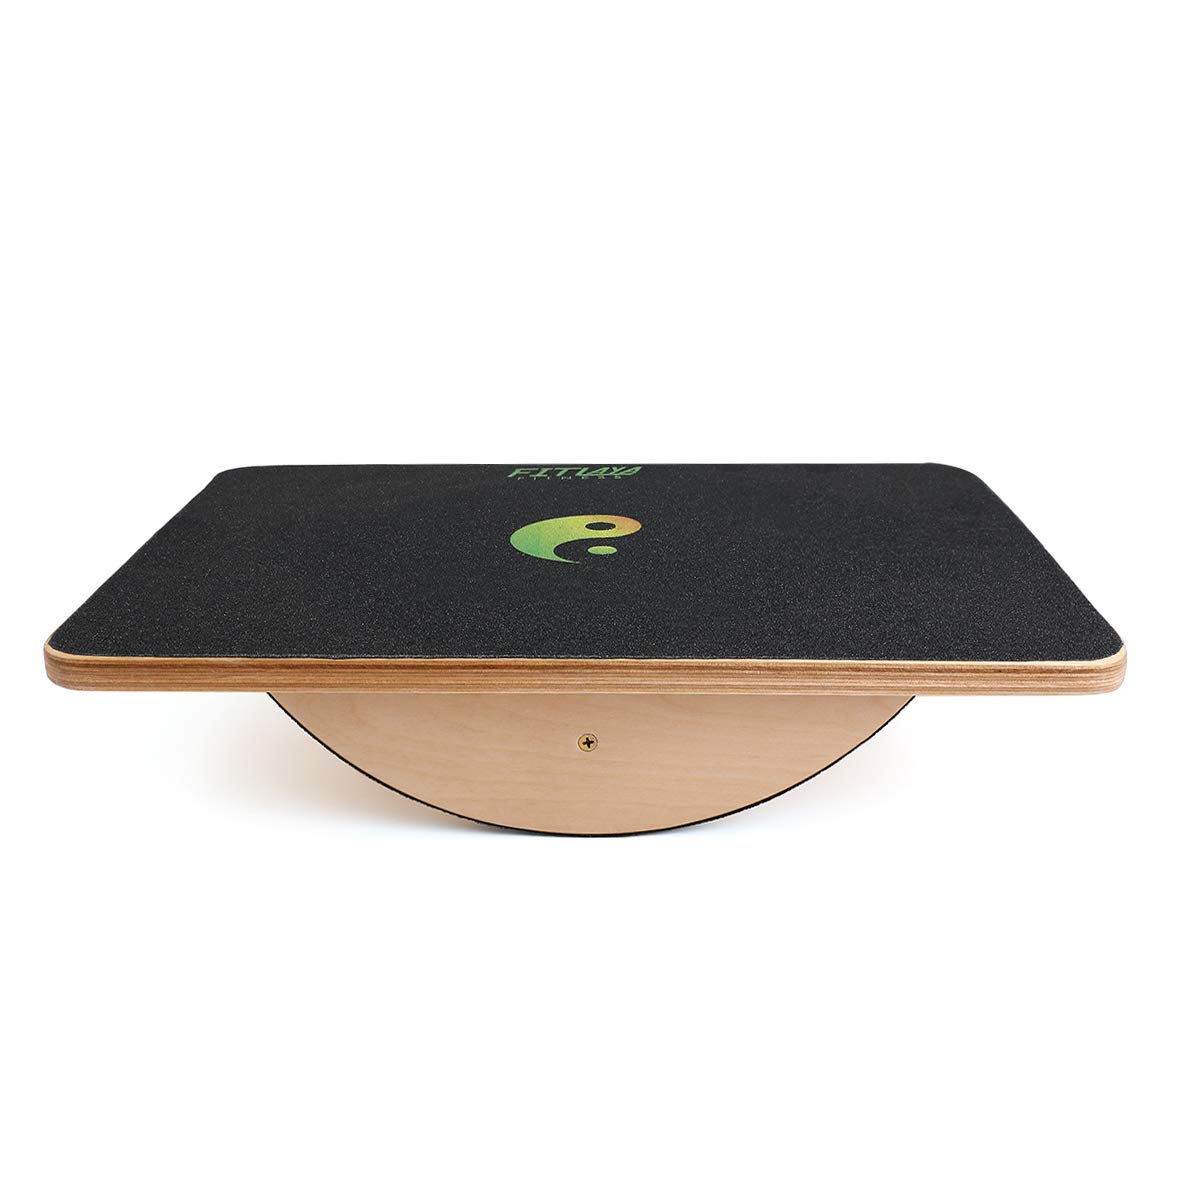 Fitlaya Fitness Balance Board, Wobble Board for Balancing Core